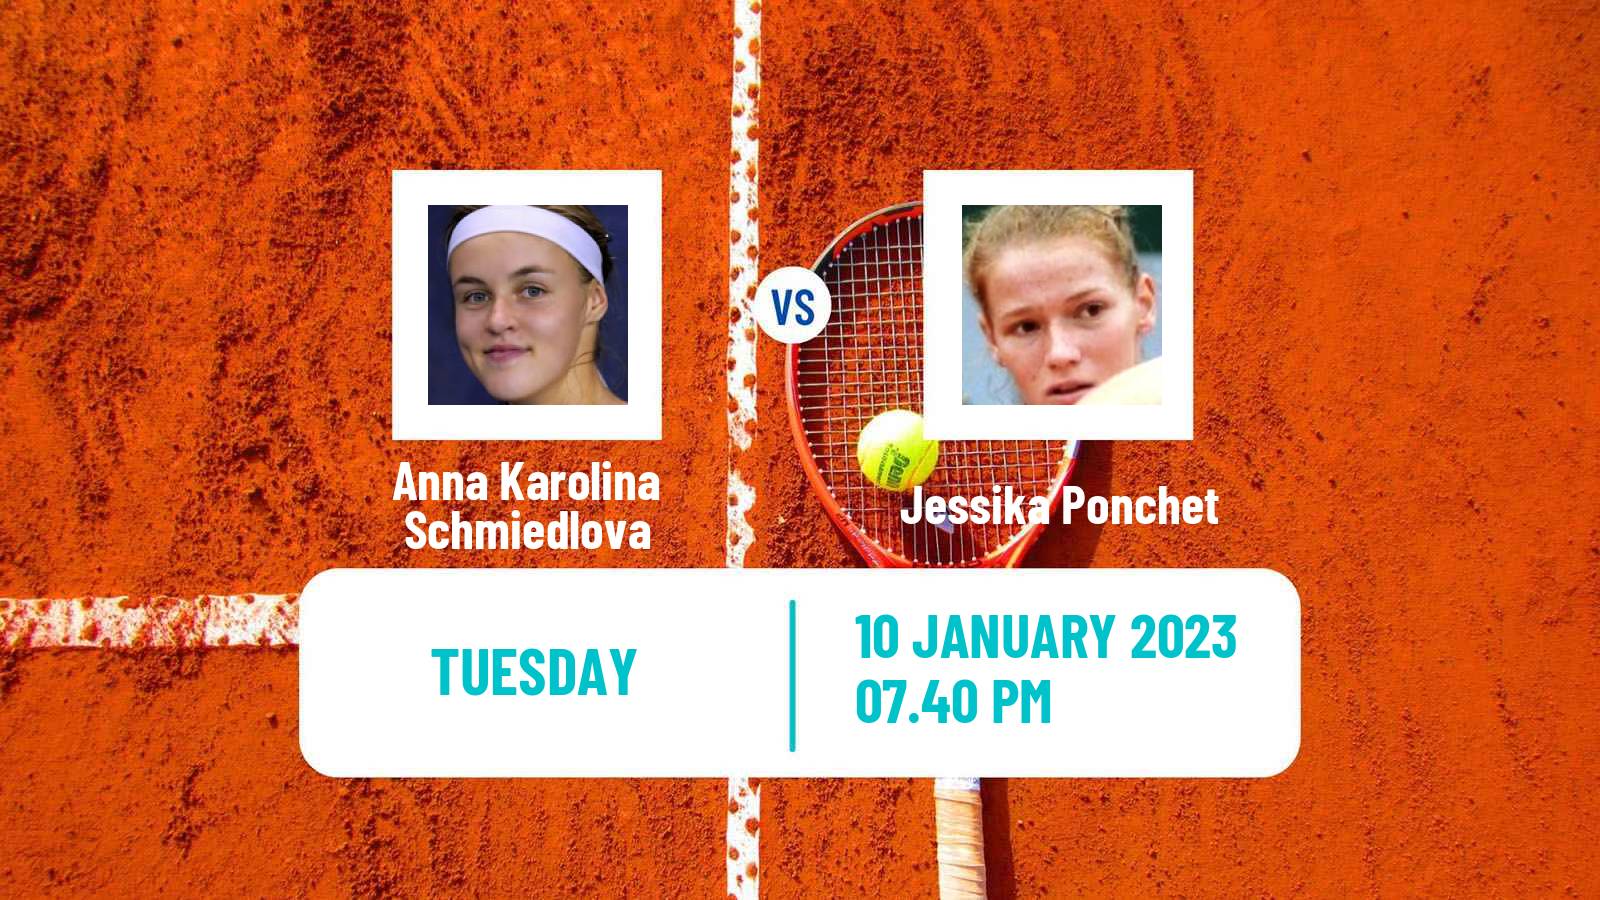 Tennis WTA Australian Open Anna Karolina Schmiedlova - Jessika Ponchet